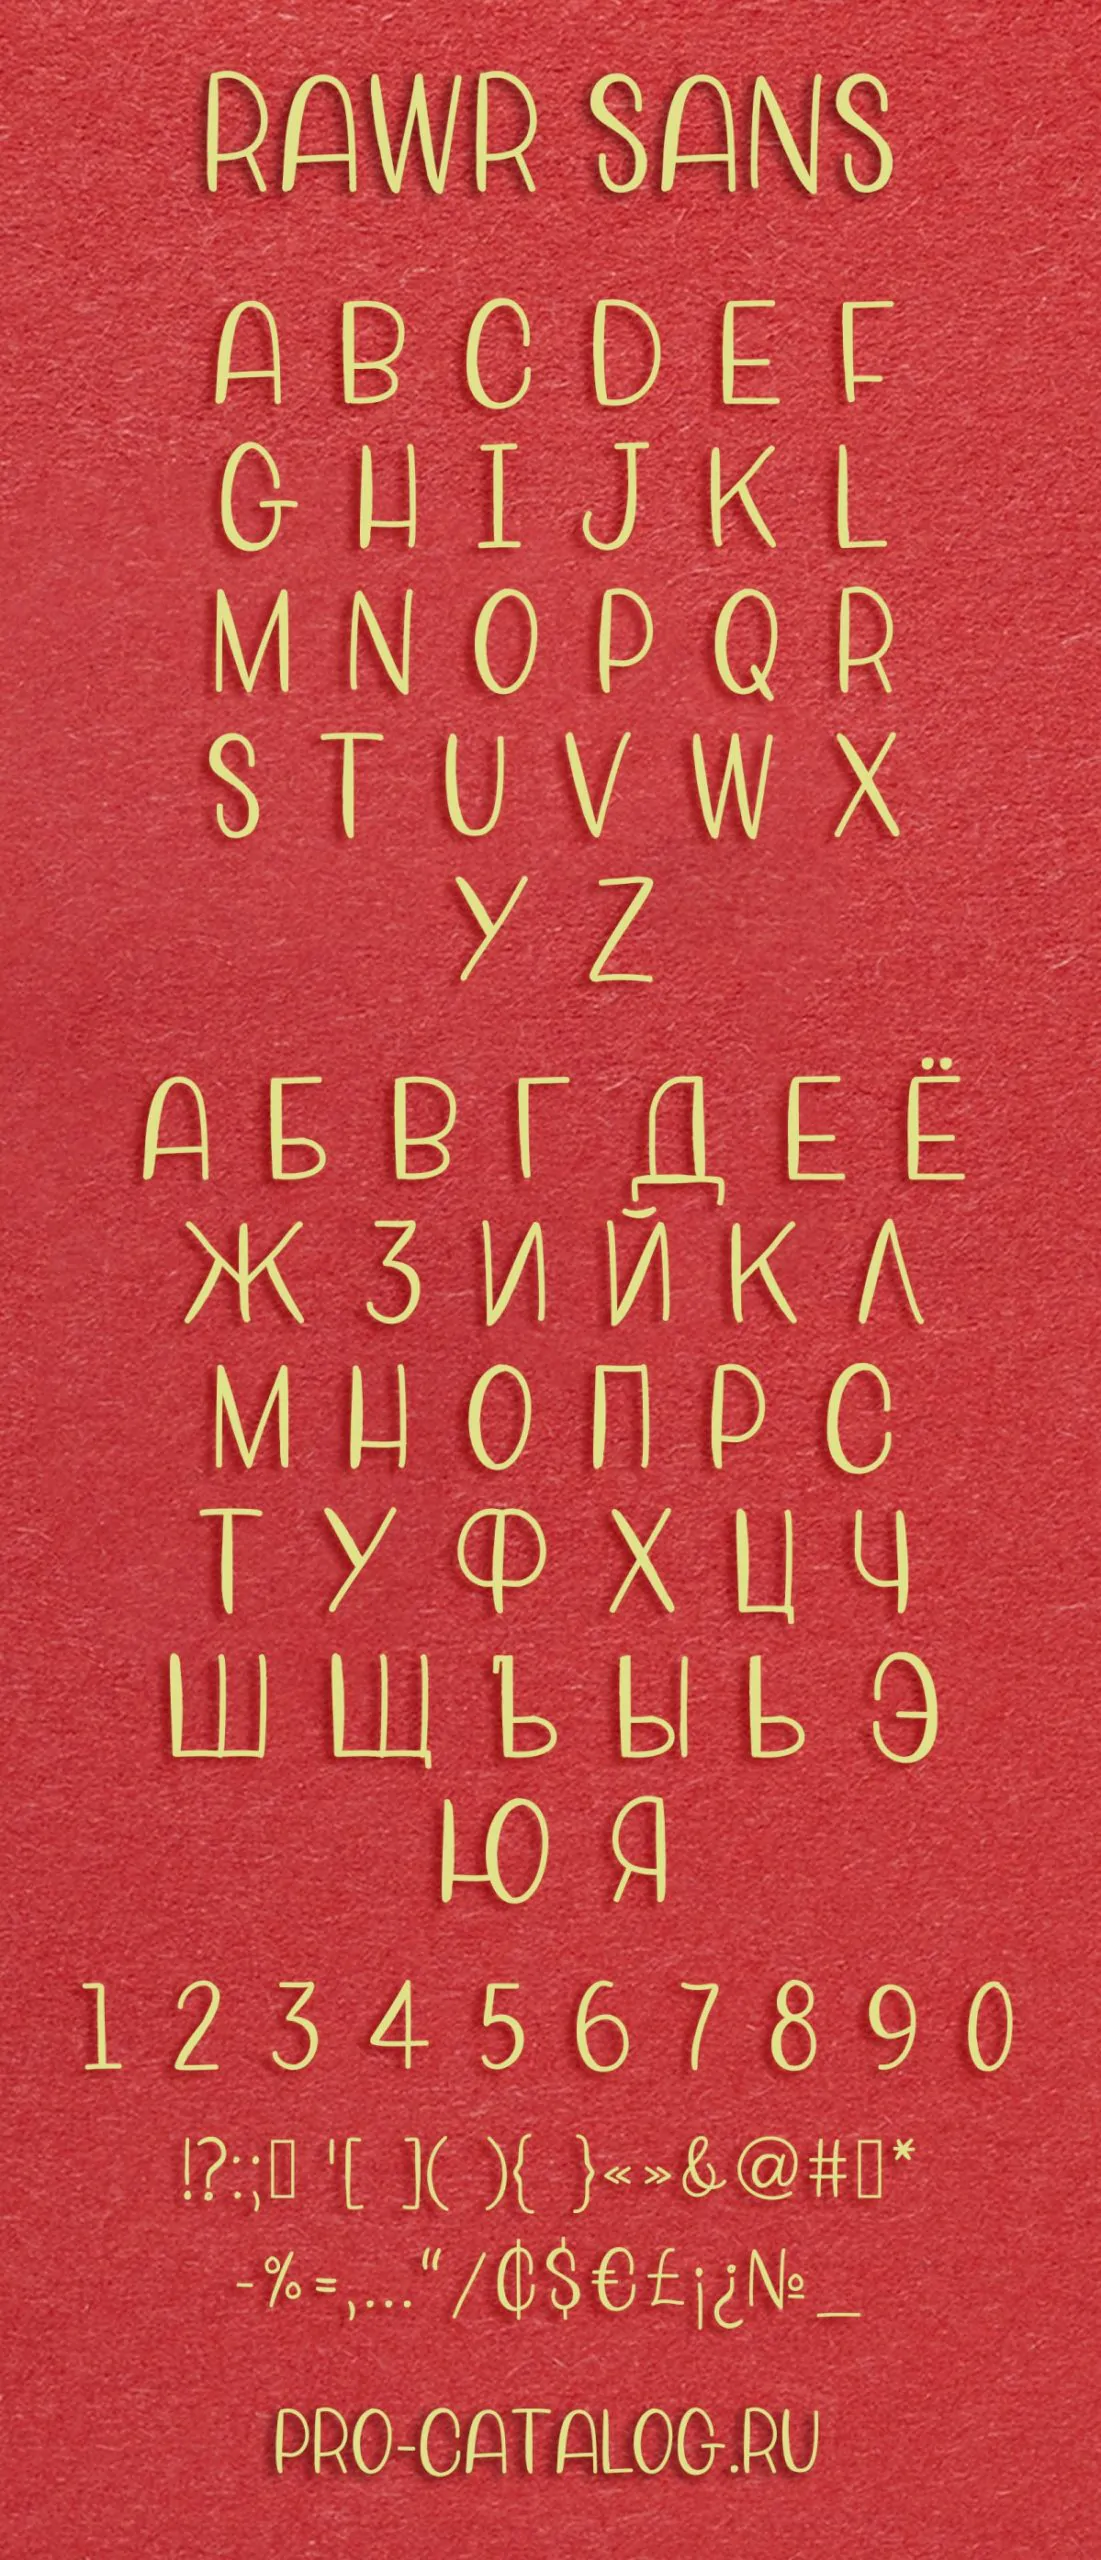 Шрифт Rawr Sans Serif Font Trio Cyrillic